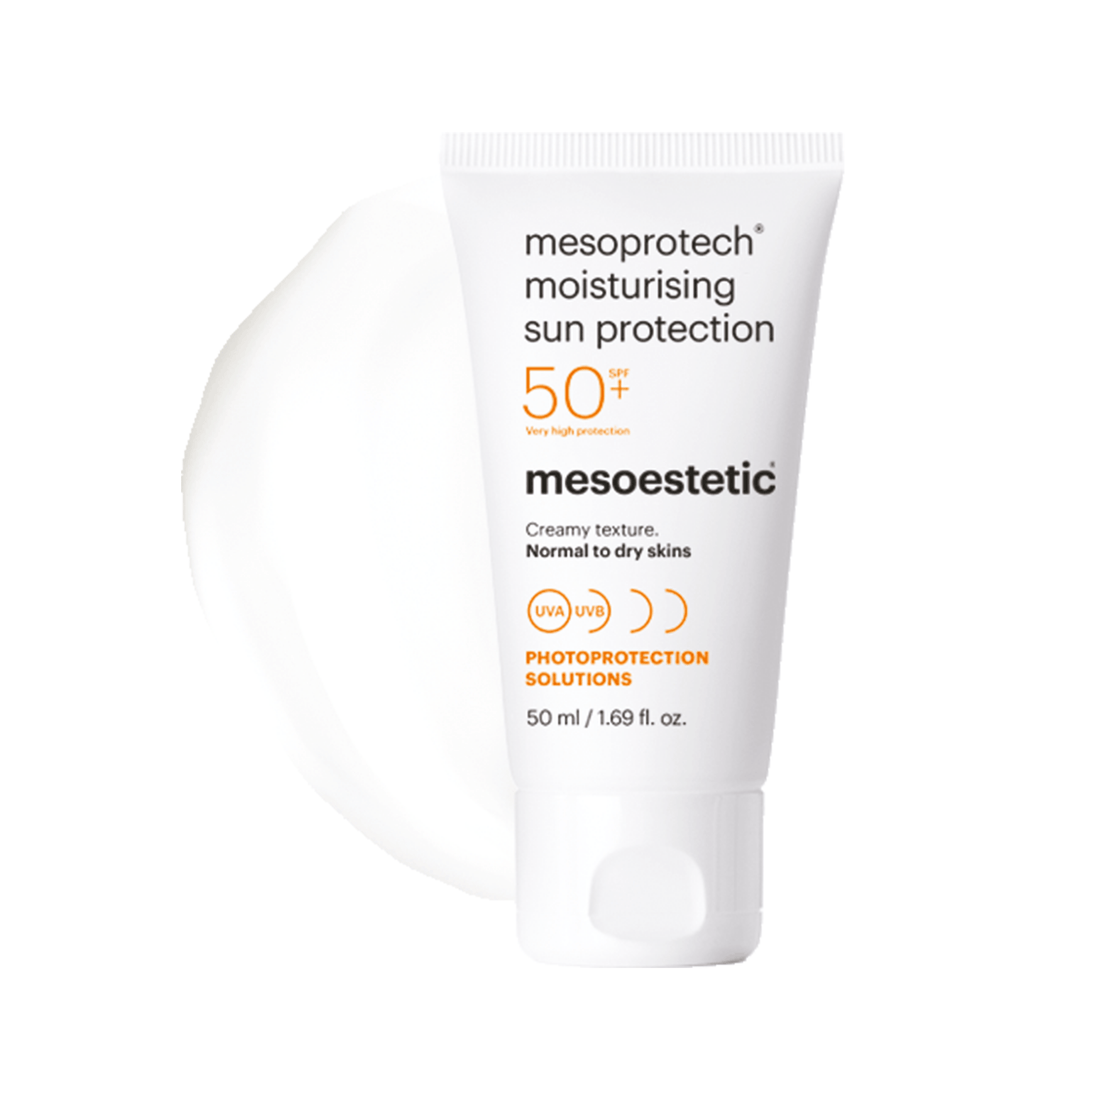 mesoprotech® moisturising sun protection 50+